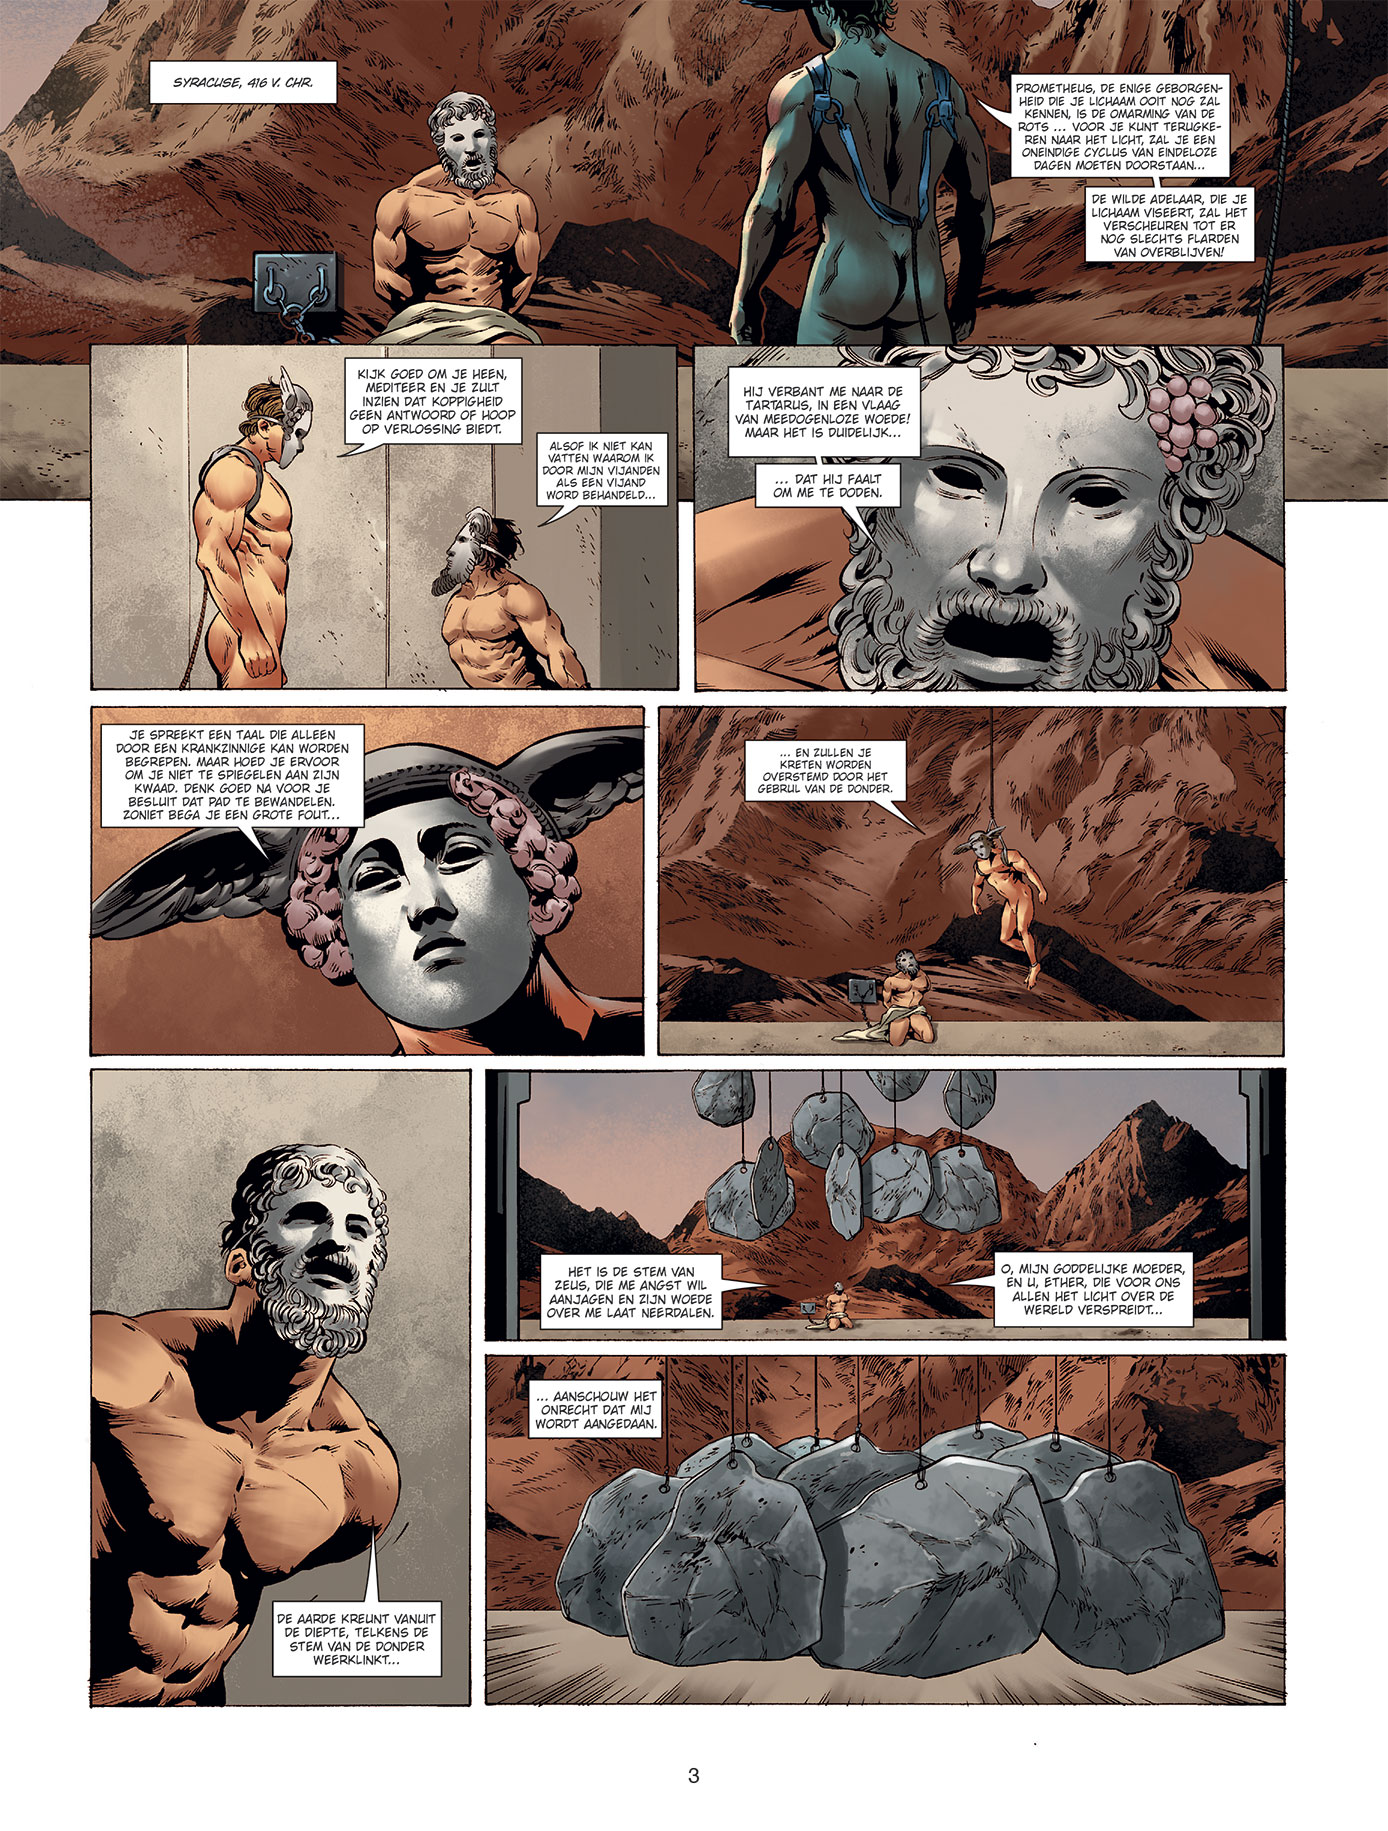 Prometheus 15 pagina 1